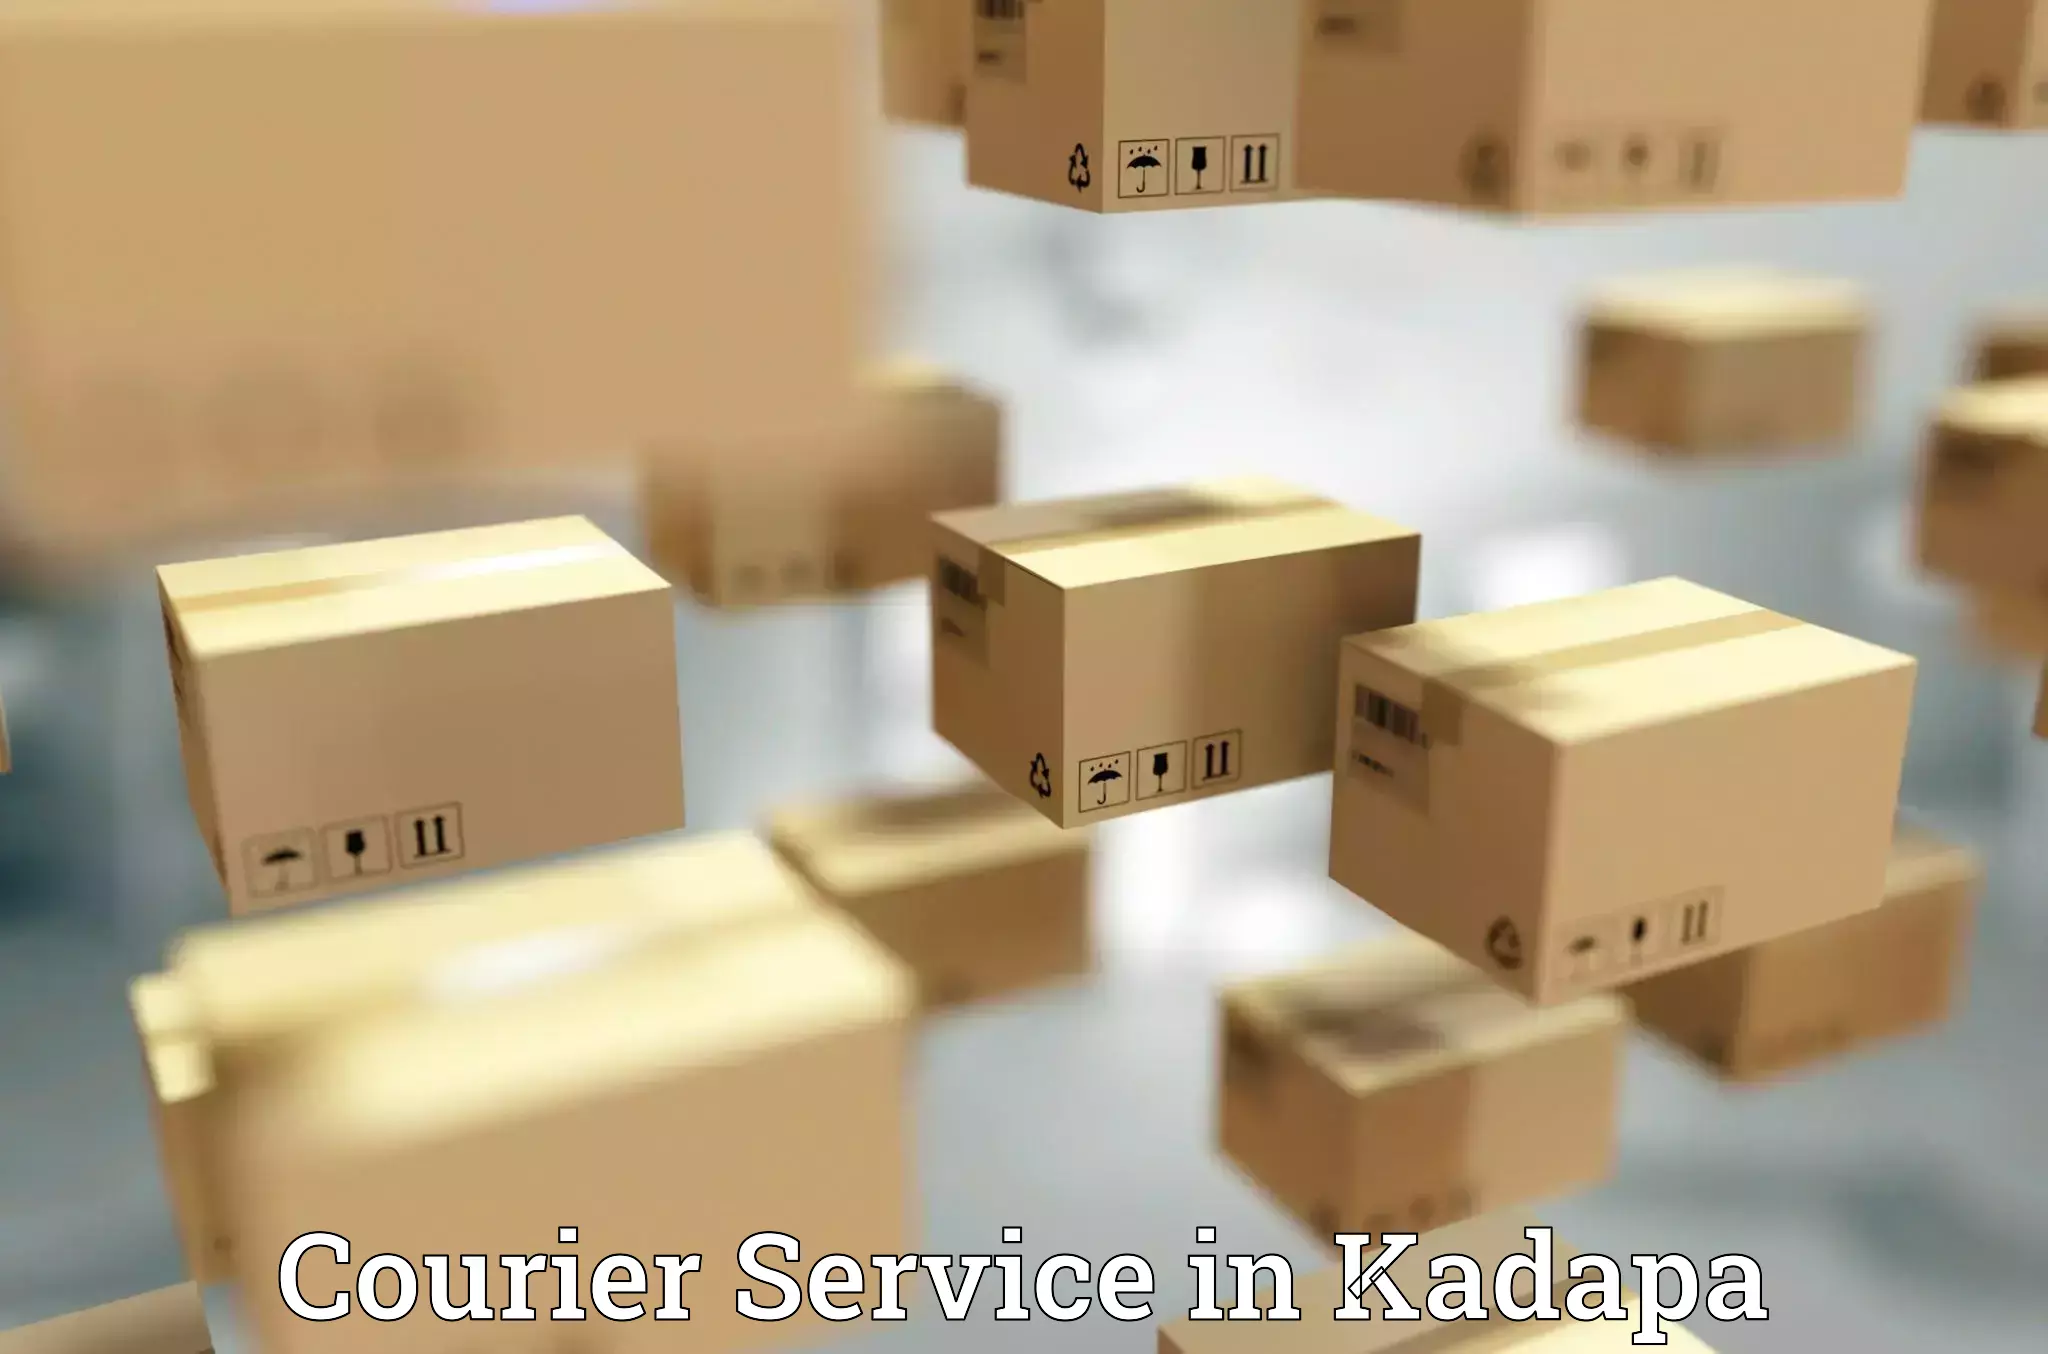 Affordable logistics services in Kadapa